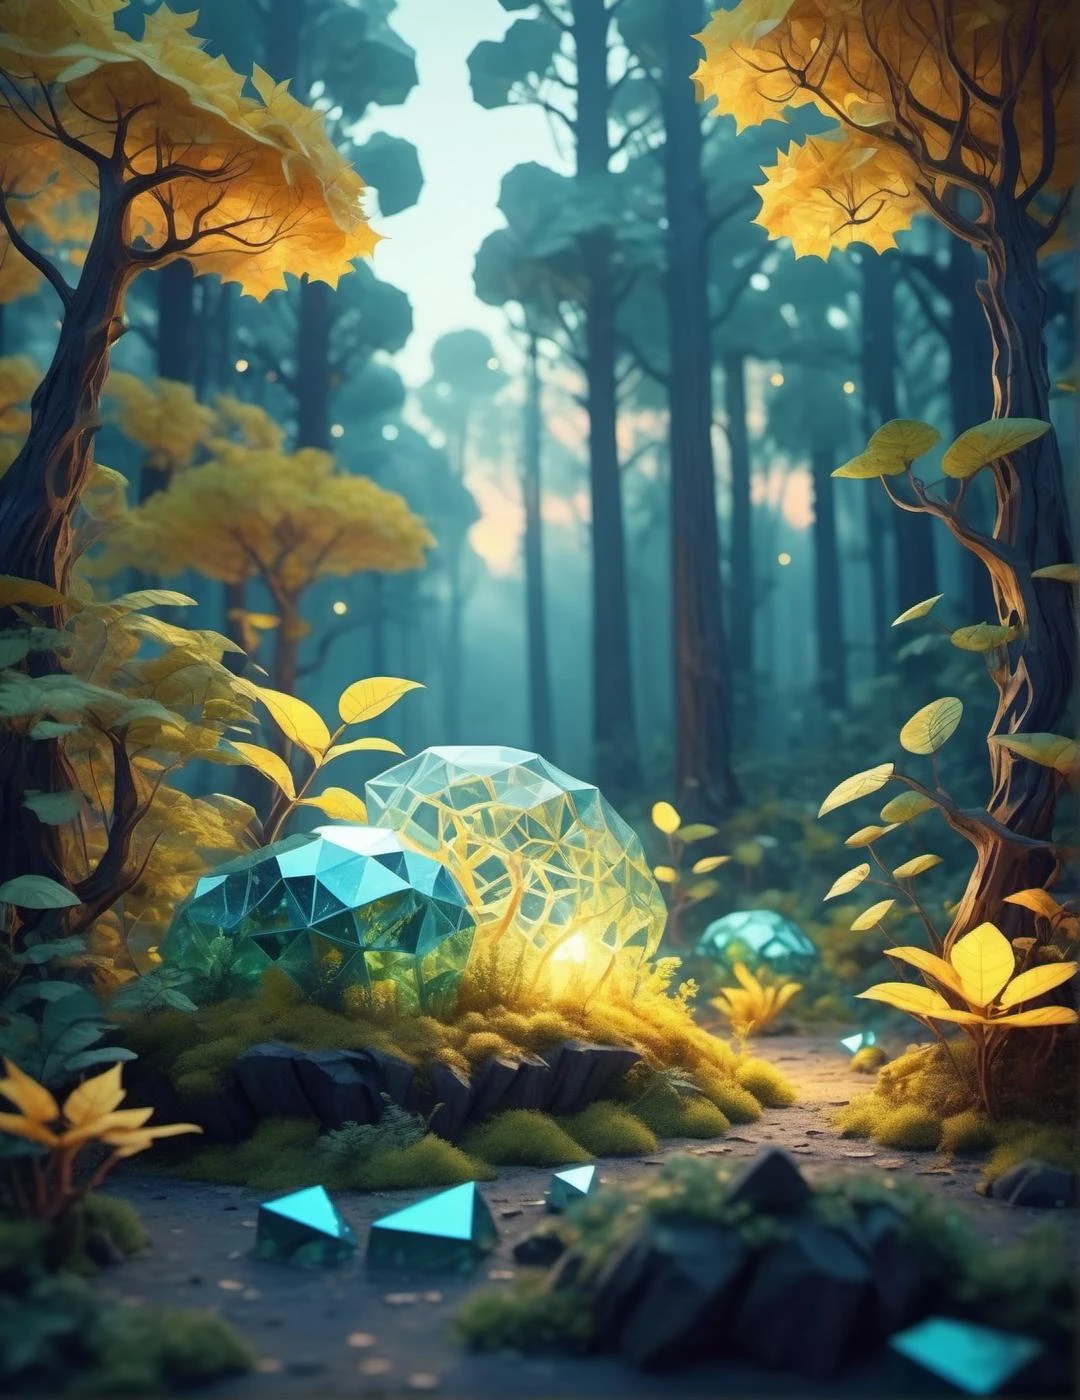 3D 游戏概念风景：外星低多边形森林，地面上有 Voronoi 形方块, 基于体素的景观, 复杂的低多边形植物, 半透明生物发光材料, 暖黄色的叶子, (Voronoi 图案, 景深, (旋涡状散景:1.225), (柯达 portra 400:0.875) :1.3), (逼真的复杂外星丛林背景:1.1), 闪亮的玻璃, (湍流毒气, 史诗 surreal sunset in woods, 低调灯光:1.25), 非凡杰作, 天上的, 缥缈, 史诗, 魔法光焰, 自然柔和梦幻的灯光, ((冷蓝色和深碳:0.7), (电影般的感觉:1.15):1.15)